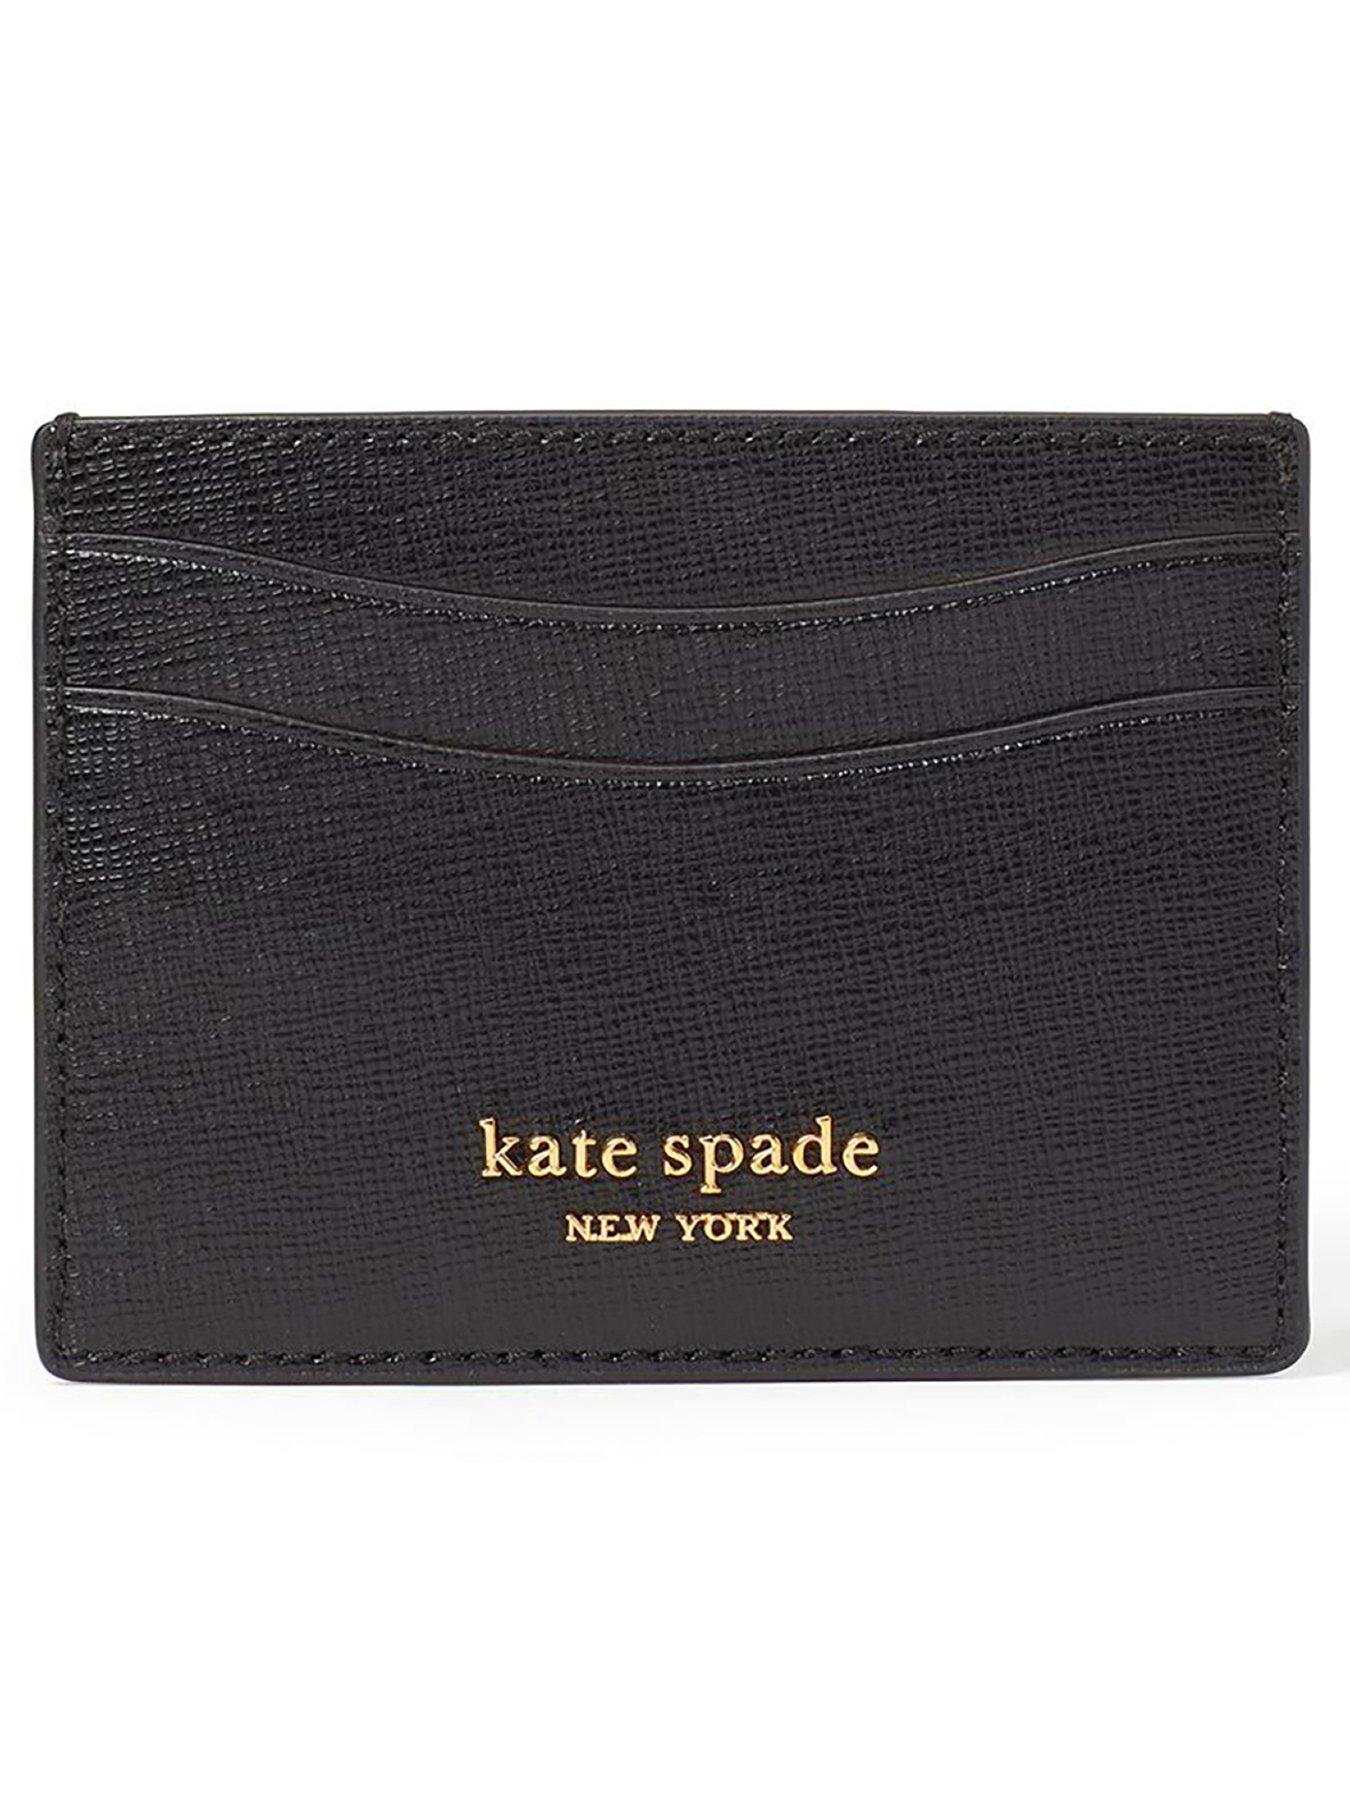 Red Shop Designer Outlet Handbags, Wallets, Jewelry | Kate Spade Outlet